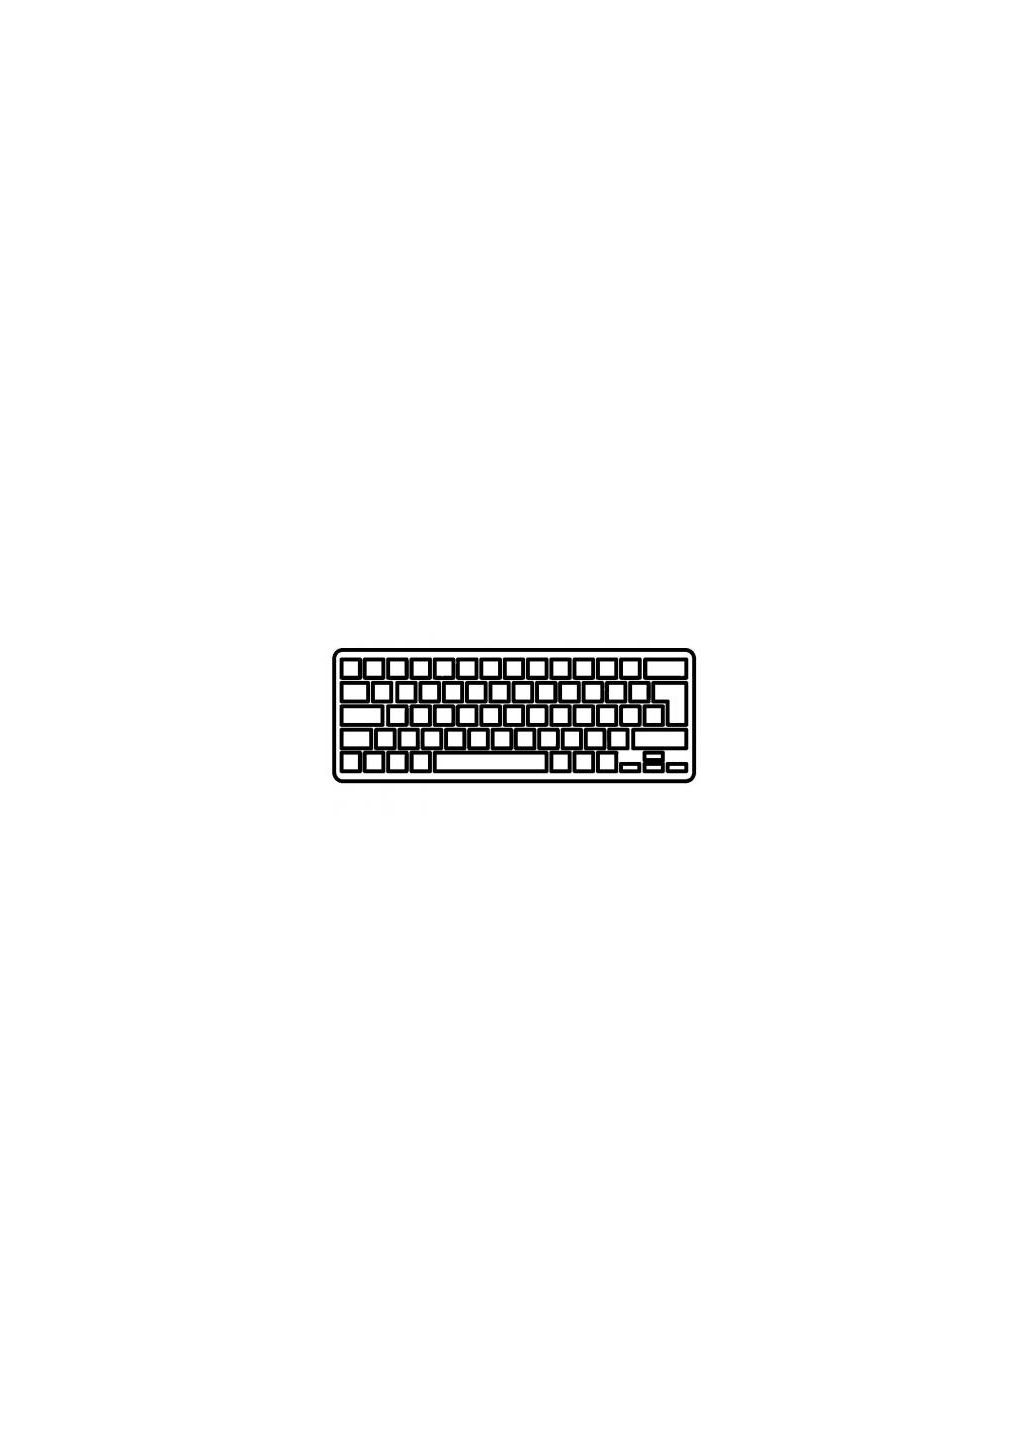 Клавиатура ноутбука EliteBook 1012,1020 G1 черн.без рамки,под подсв. UA/RU/US (A43370) HP elitebook 1012, 1020 g1 черн.без рамки, под подсв. u (276707668)